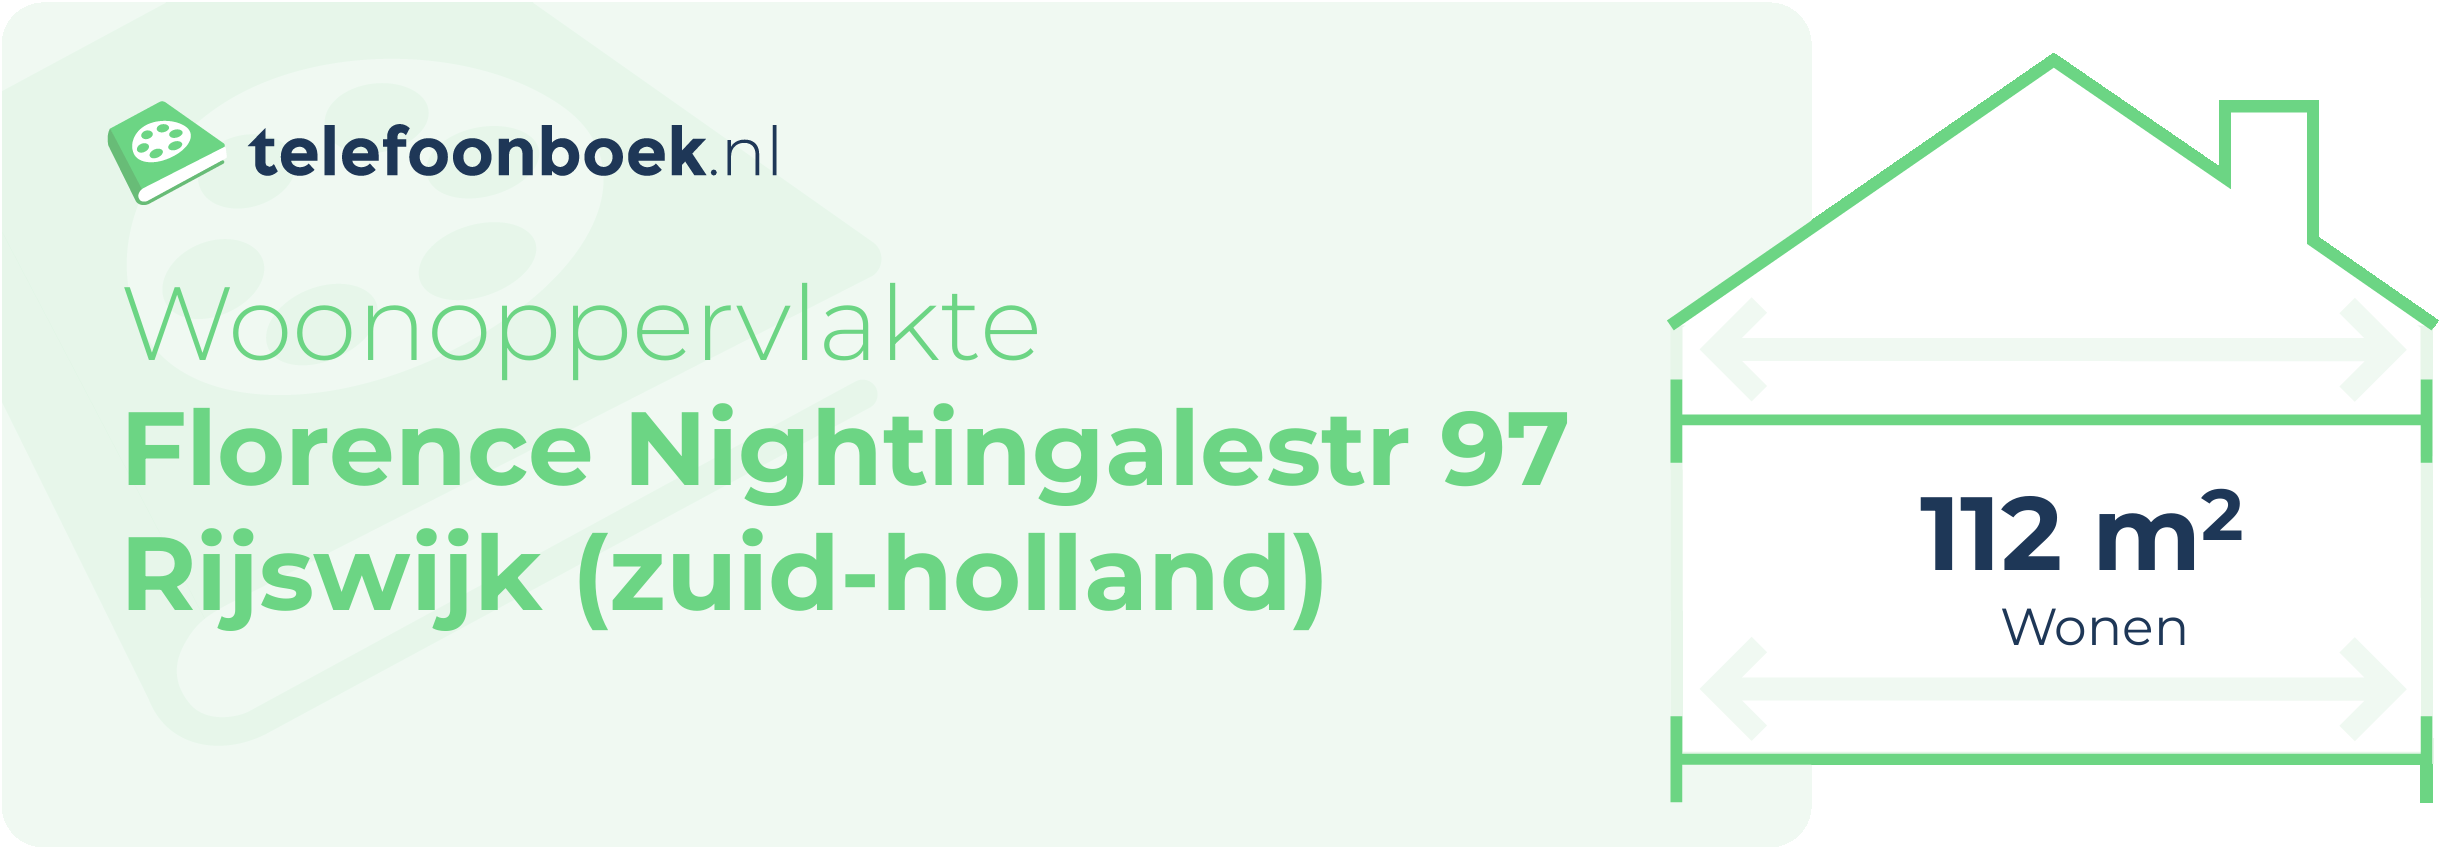 Woonoppervlakte Florence Nightingalestr 97 Rijswijk (Zuid-Holland)